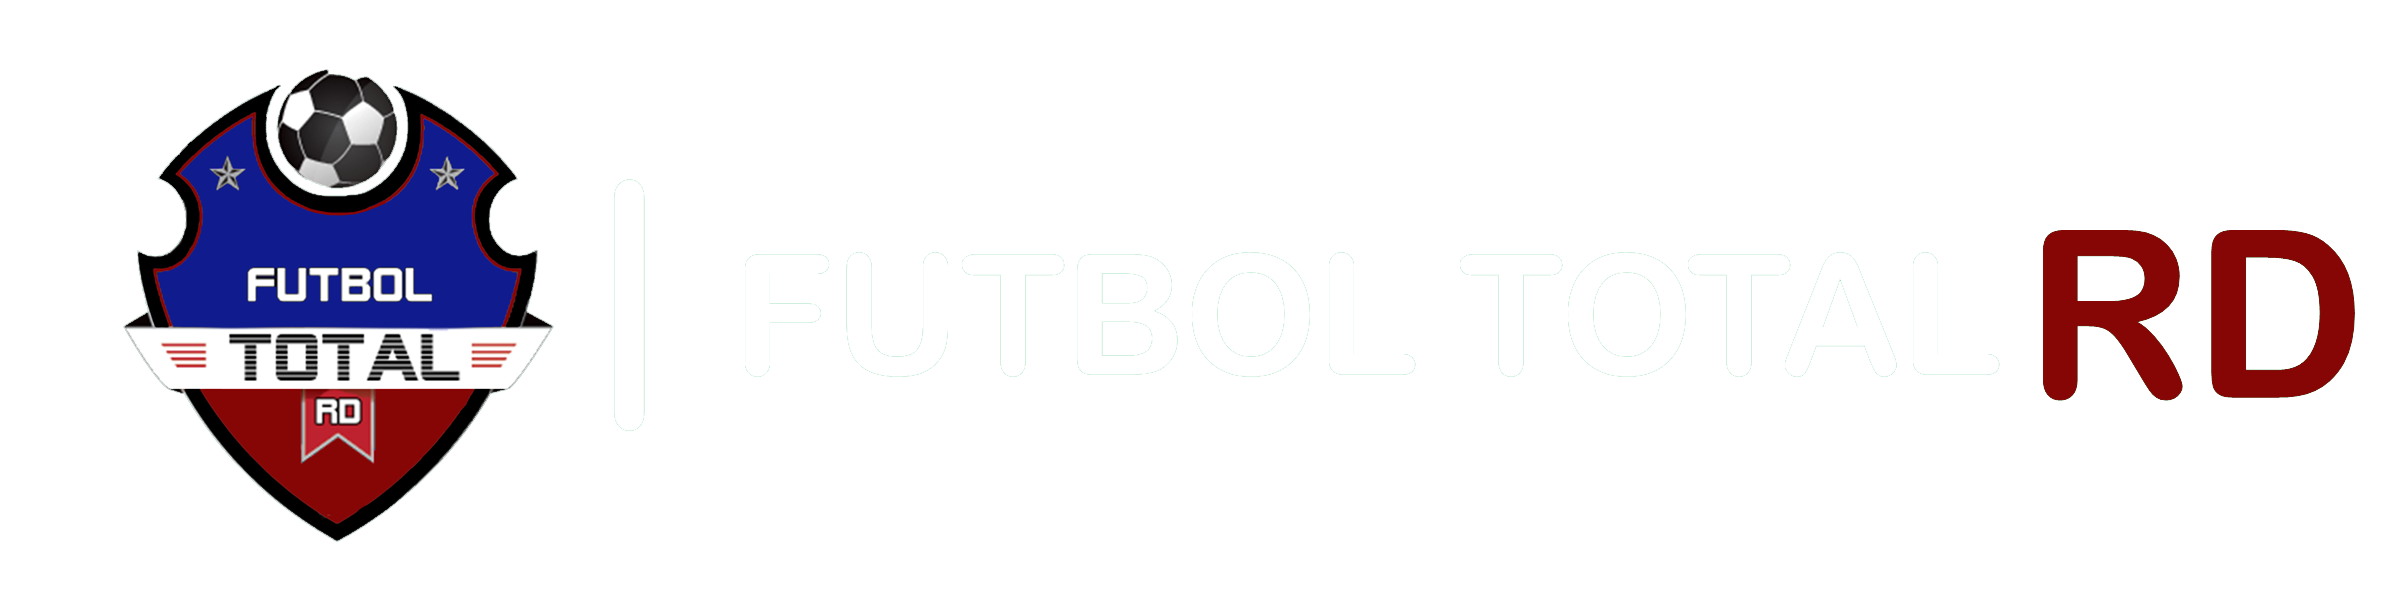 Fútbol Total RD